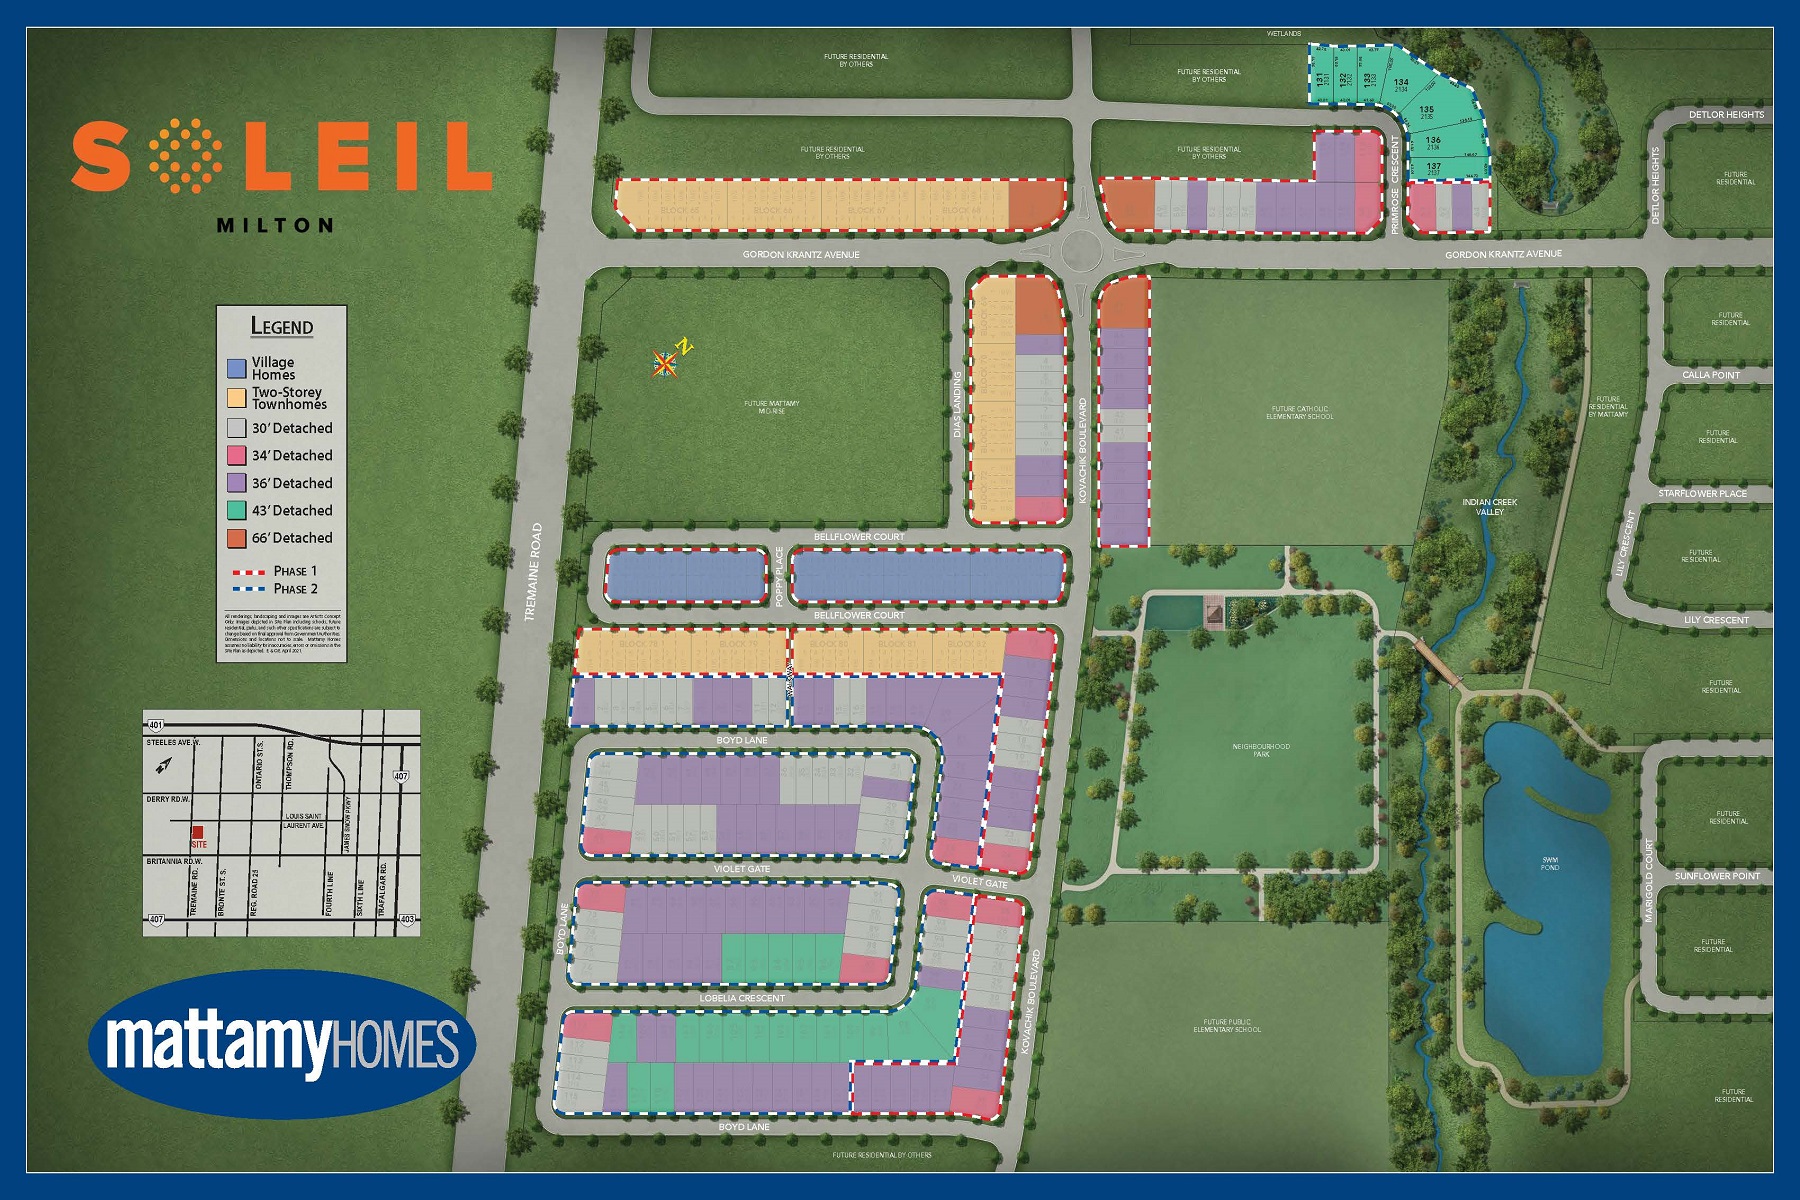 Site plan for Soleil in Milton, Ontario